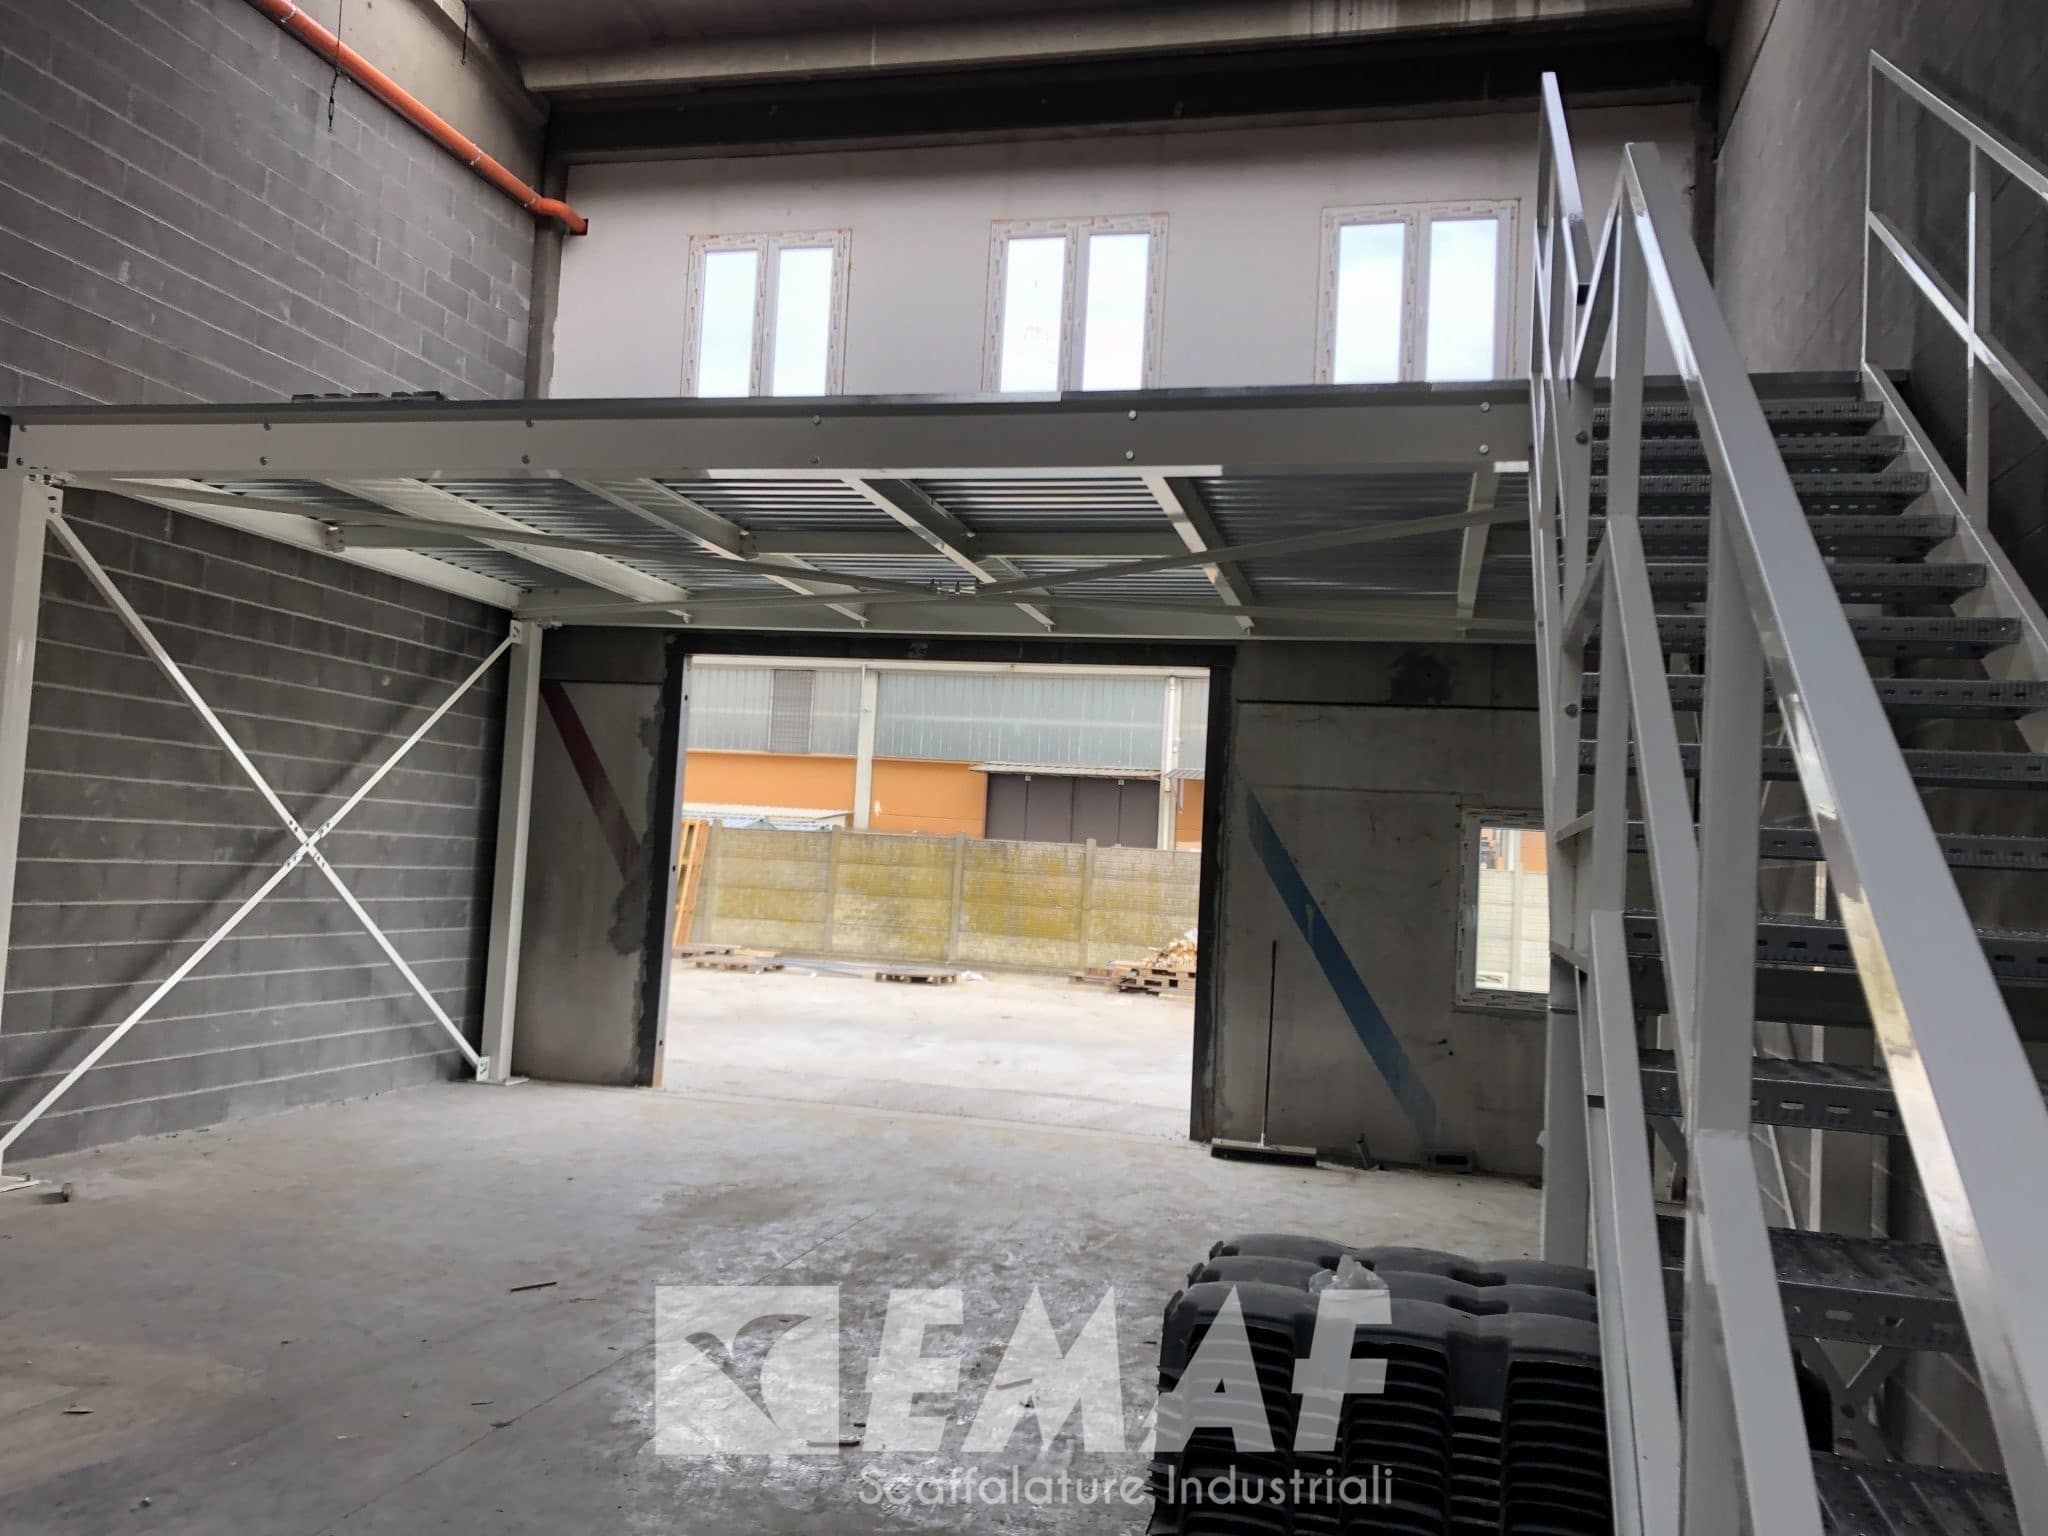 Featured image for “Four Emaf metal industrial mezzanines in Assago (MI)”